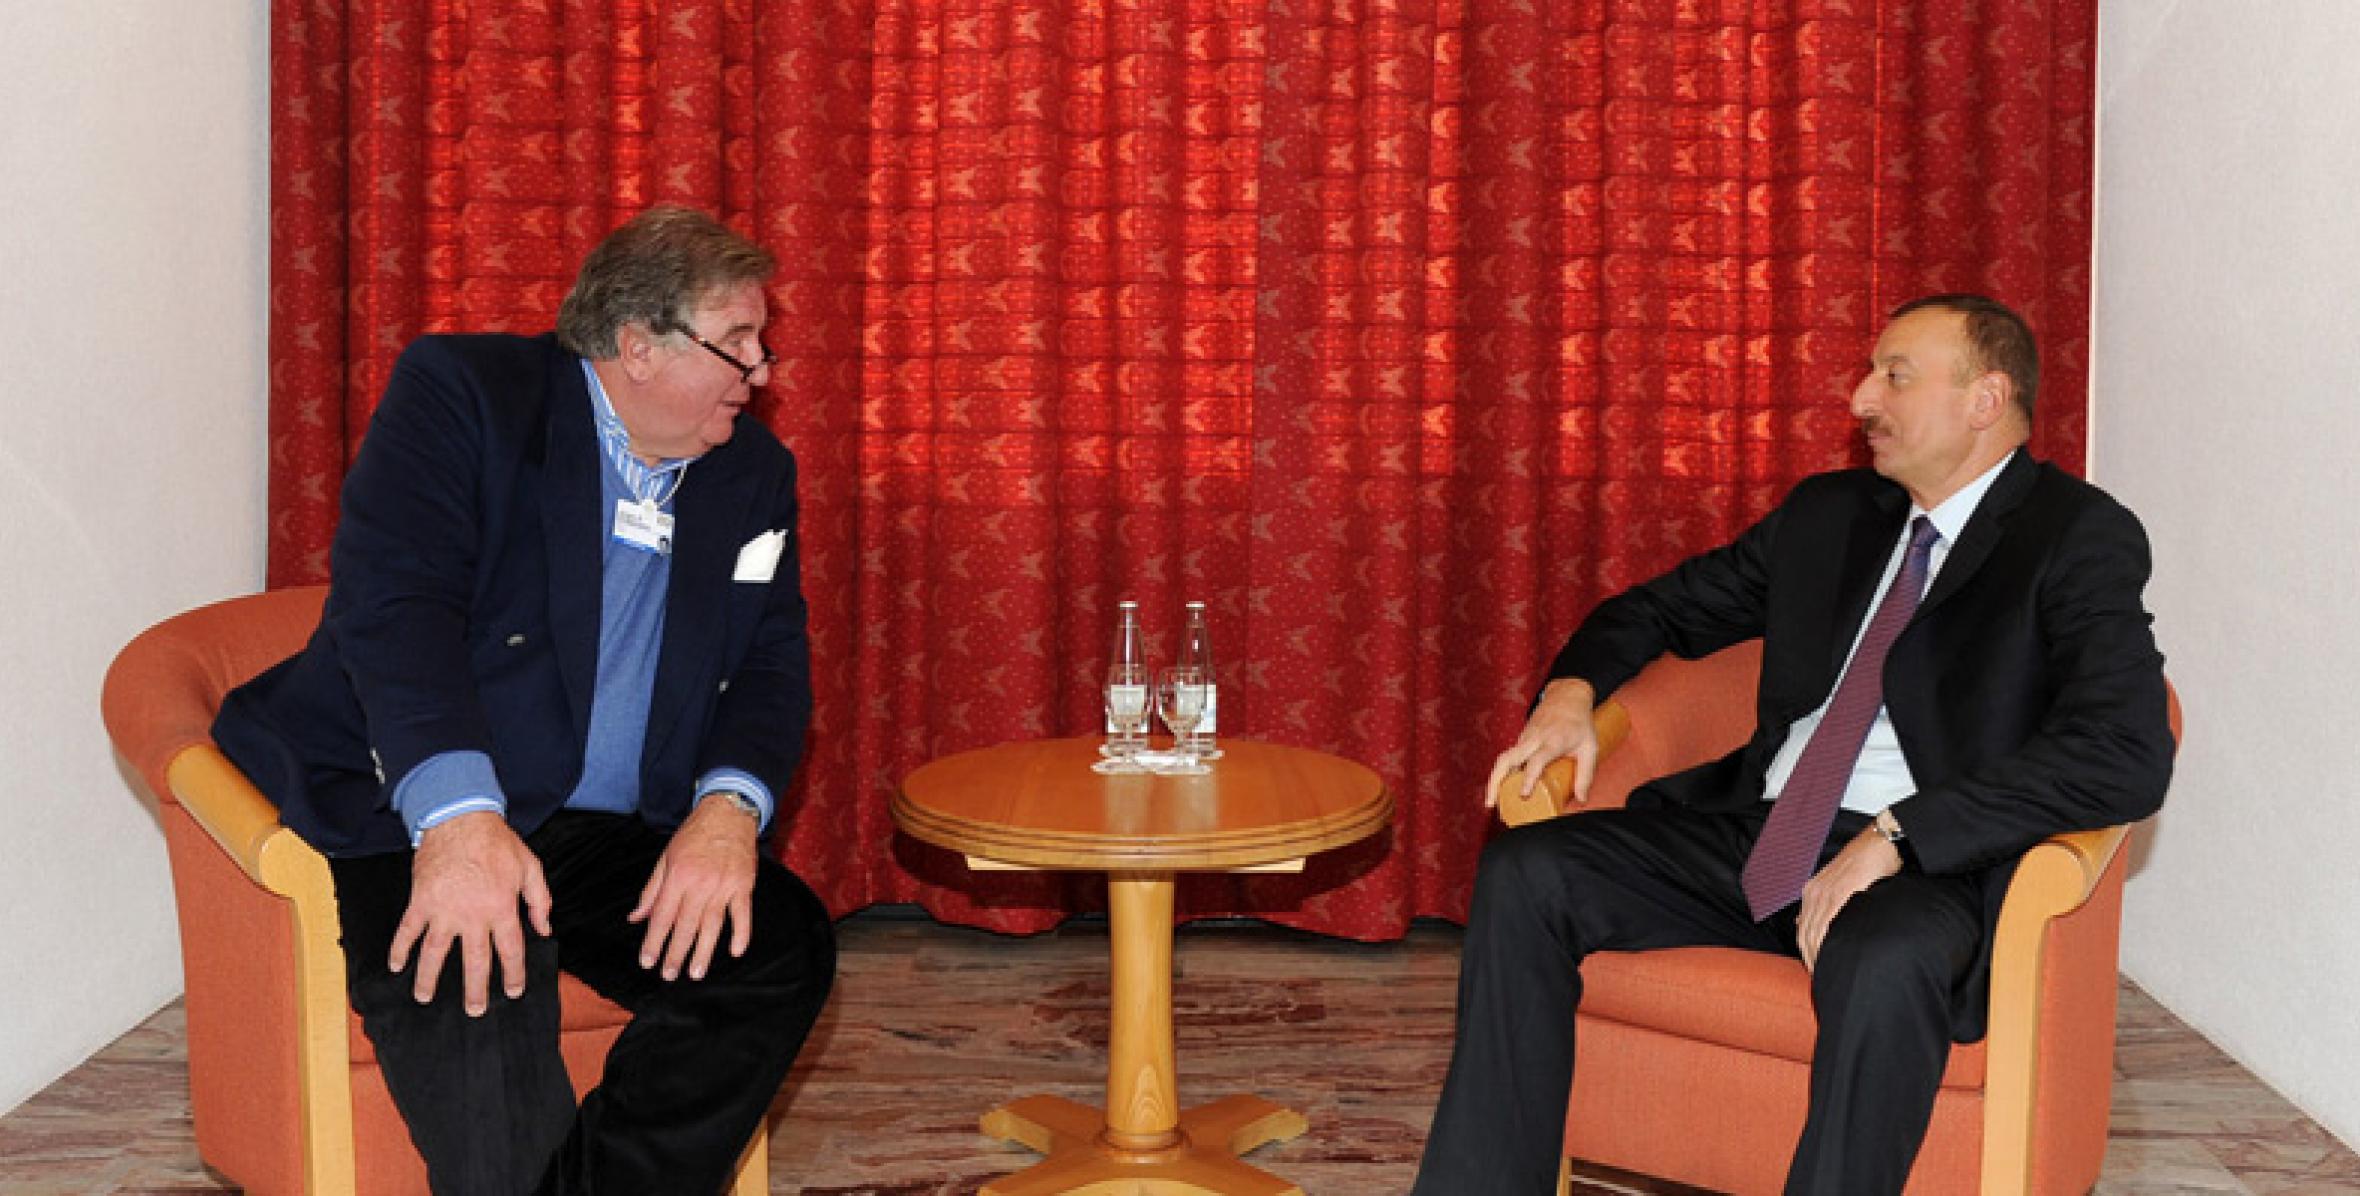 Ilham Aliyev met with Chief Executive Officer of RWE Jurgen Grossmann